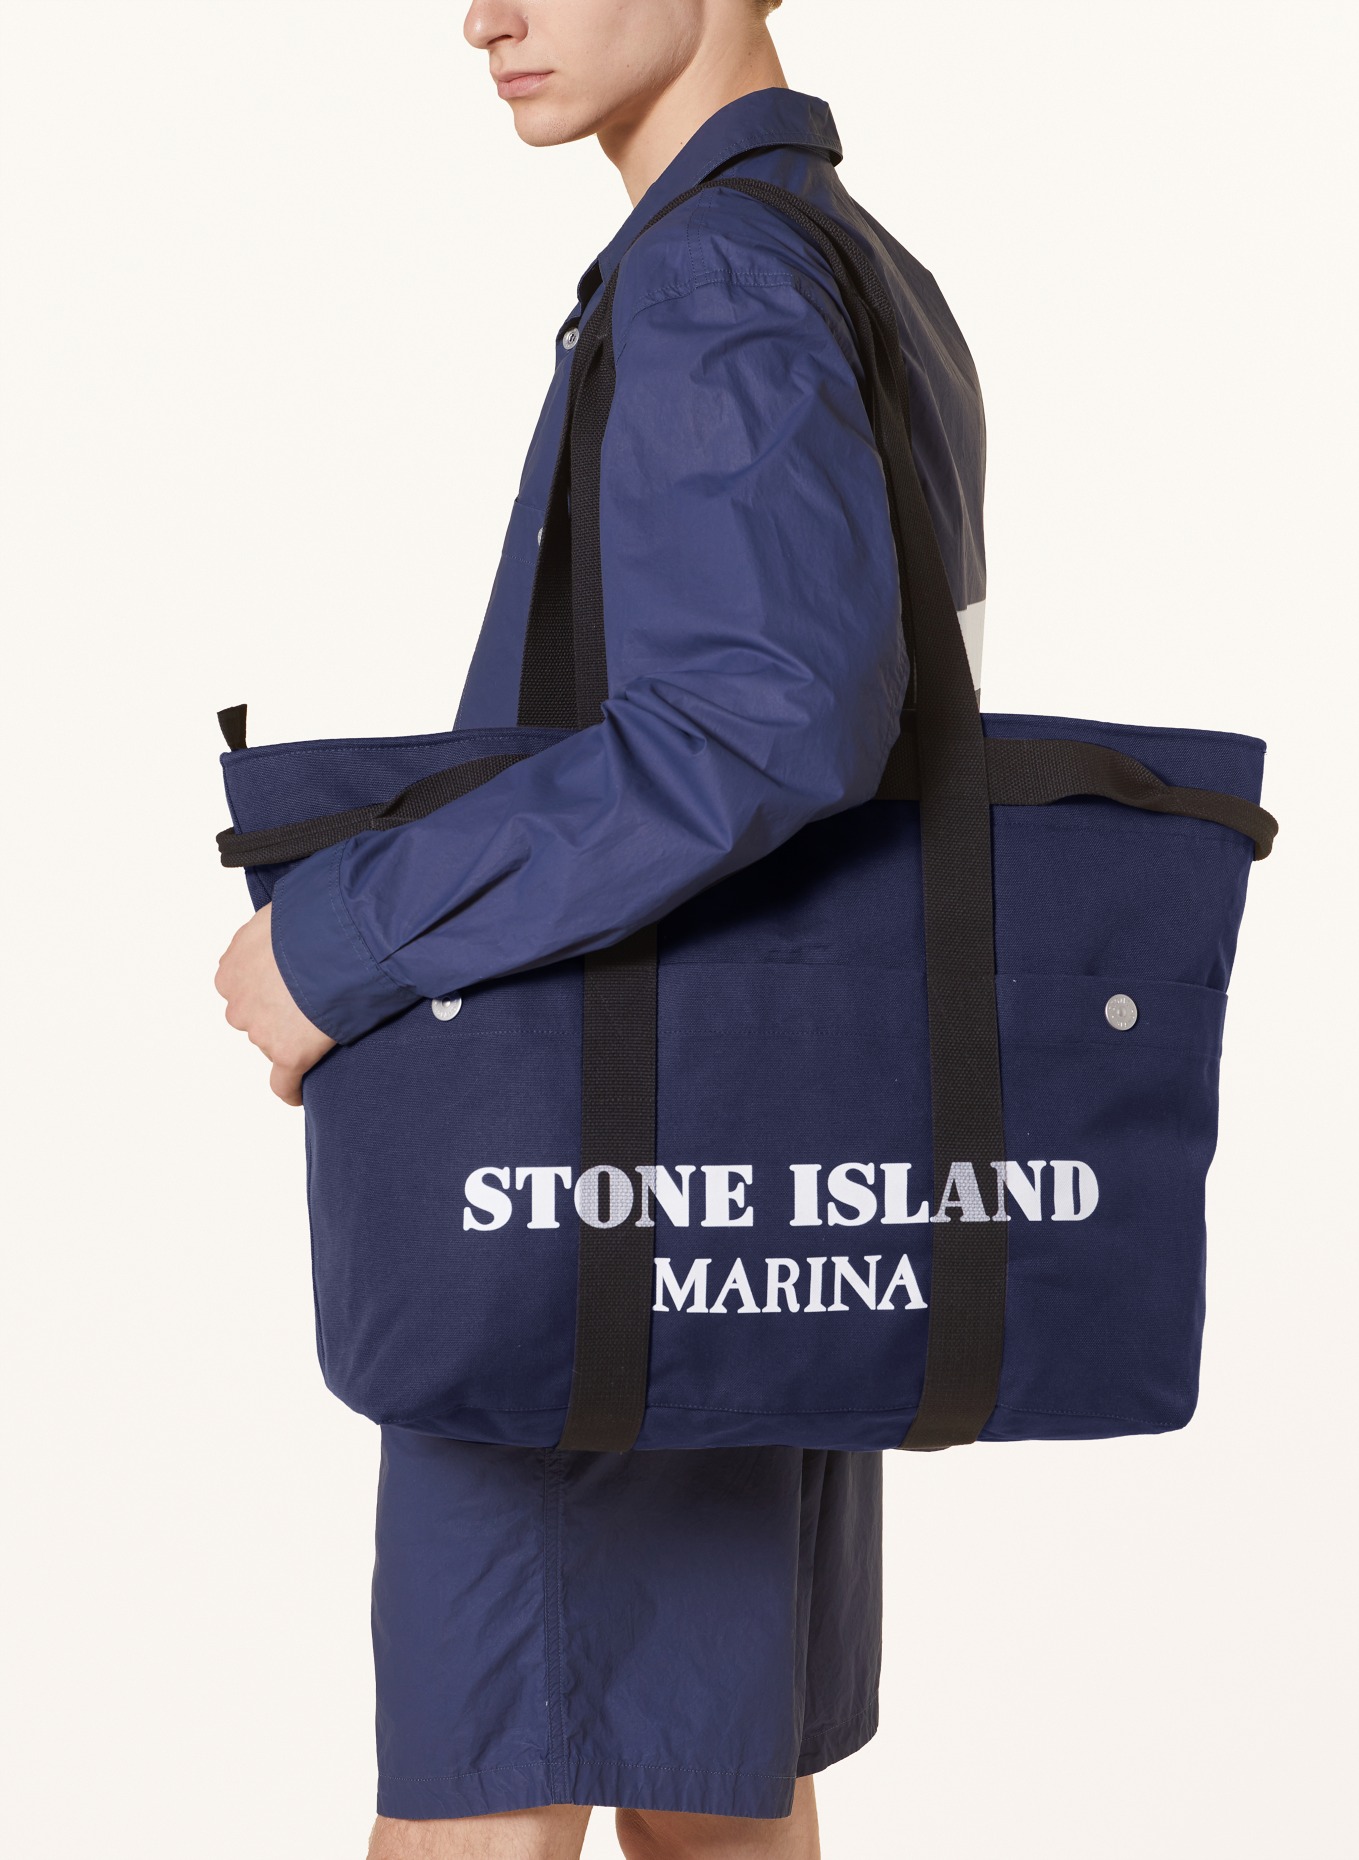 STONE ISLAND Beach bag MARINA, Color: DARK BLUE/ BLACK/ WHITE (Image 4)